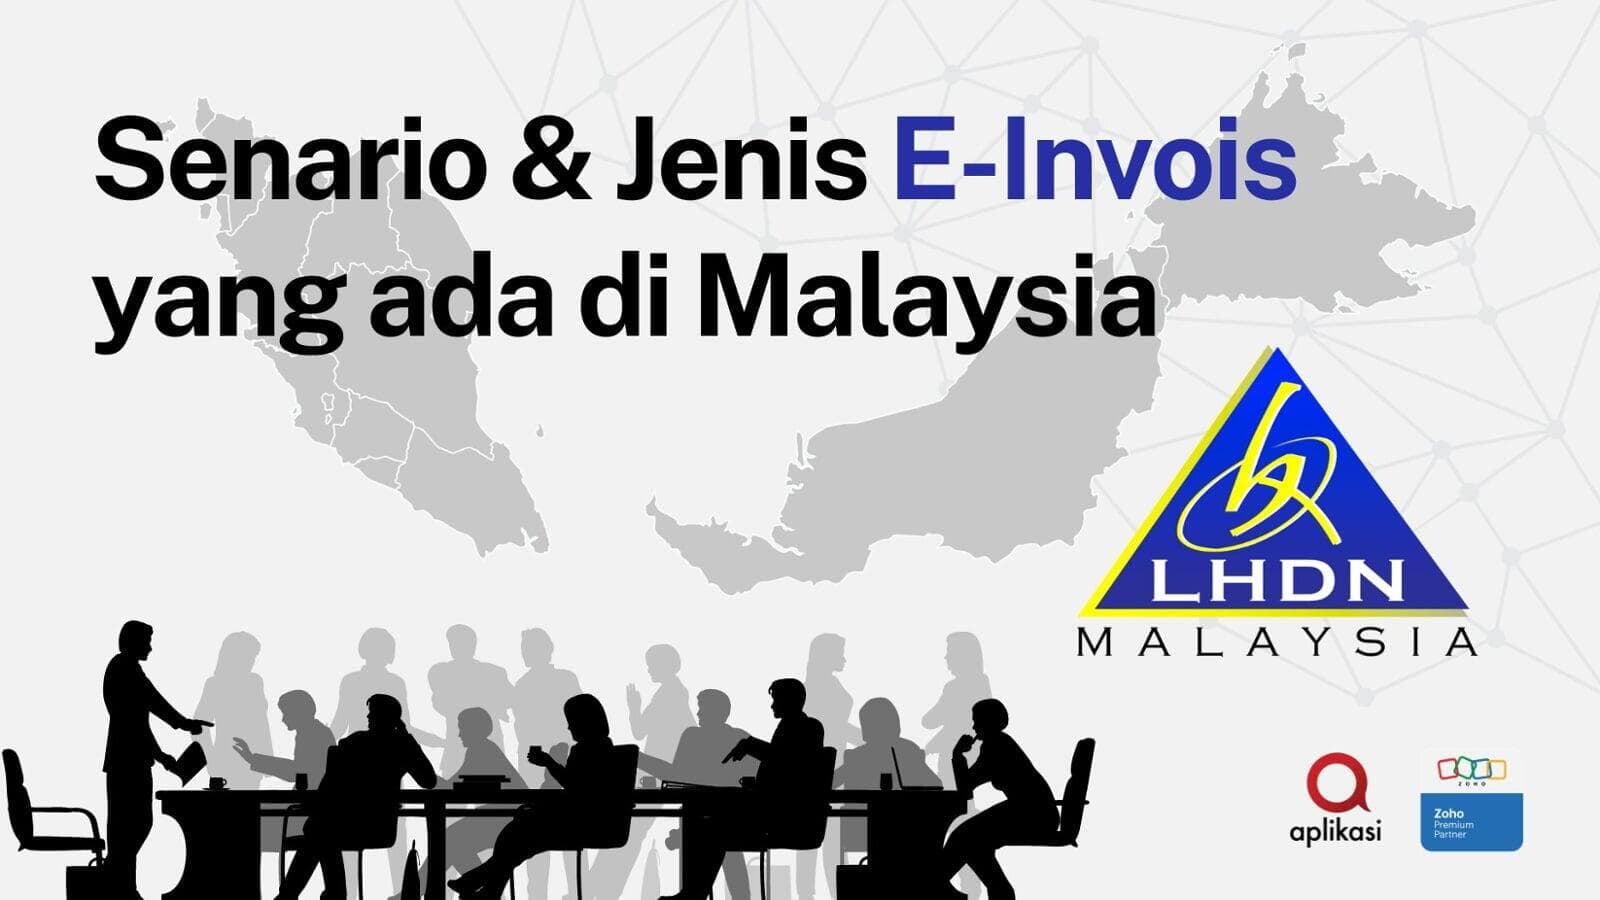 Senario & Jenis E-Invois yang ada di Malaysia